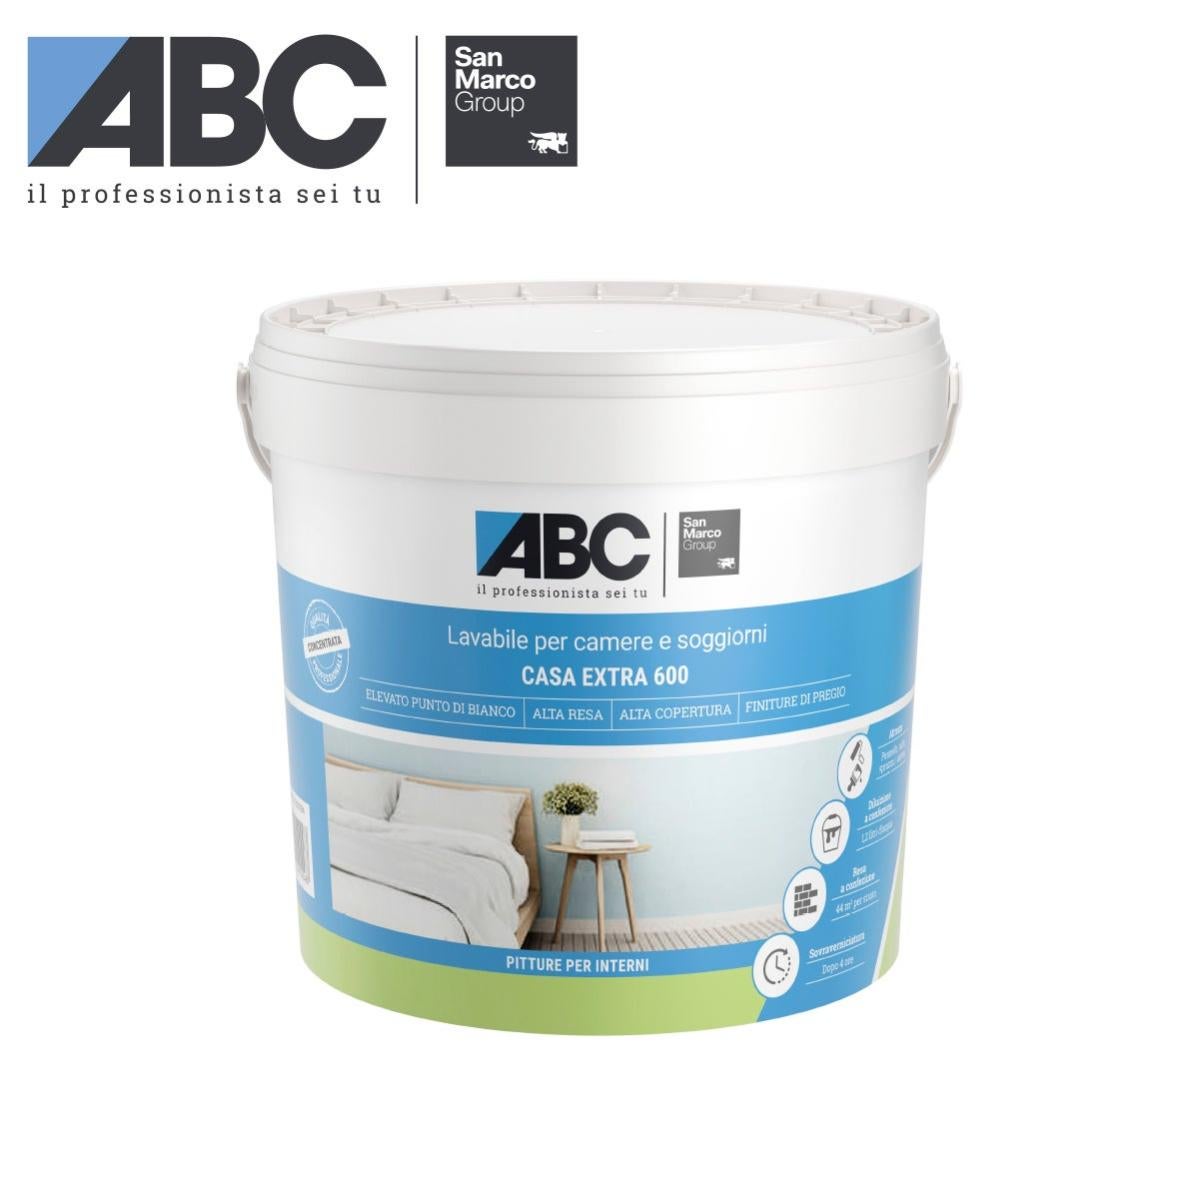 Pittura per interni Lavabile ABC Casa Extra 600 SAN MARCO Group bianco 4 L